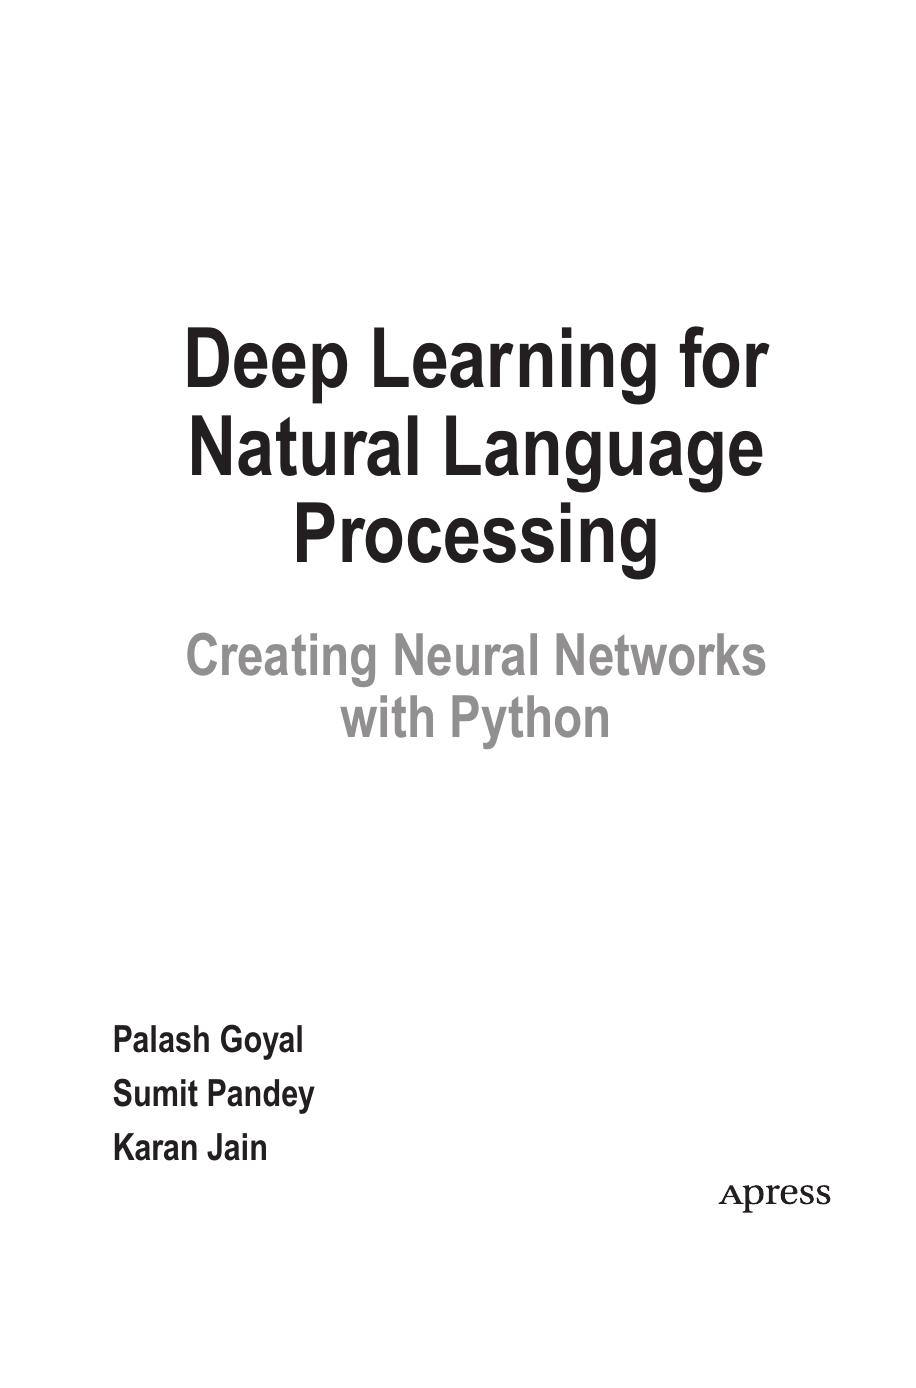 Deep Learning for Natural Language Processing. Creating Neural Networks with Python by Palash Goyal, Sumit Pandey, Karan Jain